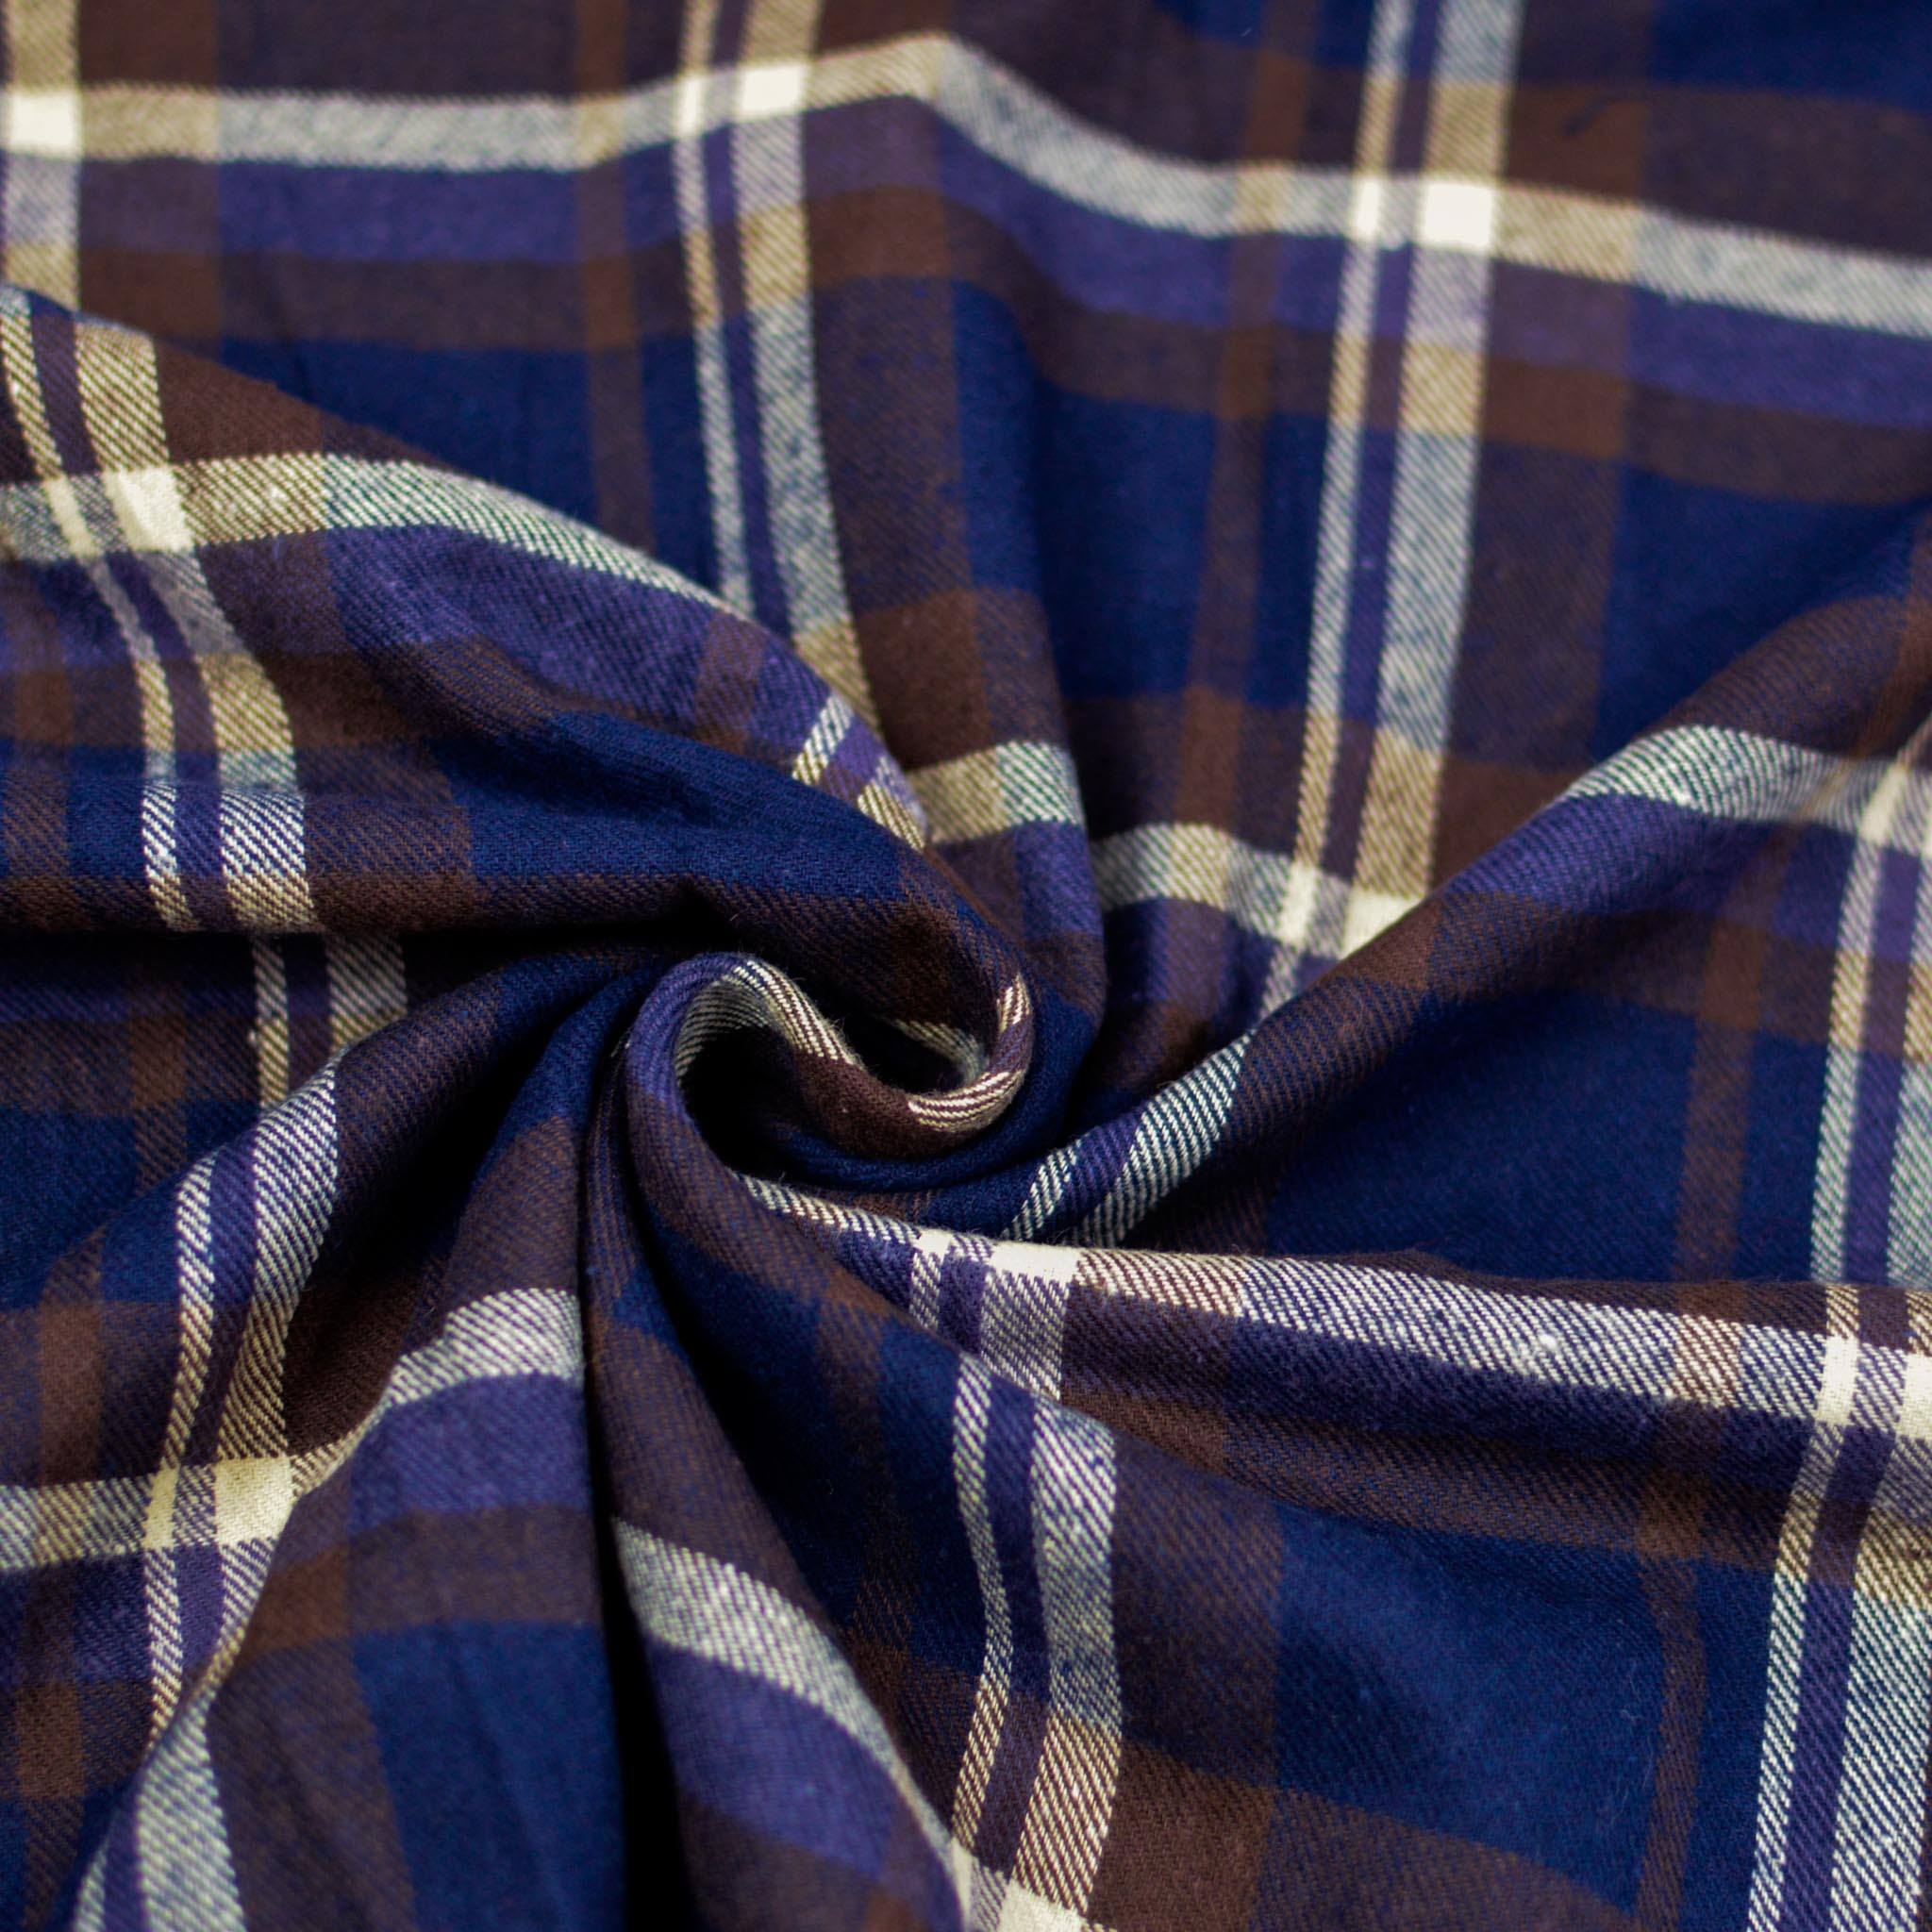 Baumwoll Flanell - dunkelblau braun violet kariert Fabric poshpinks